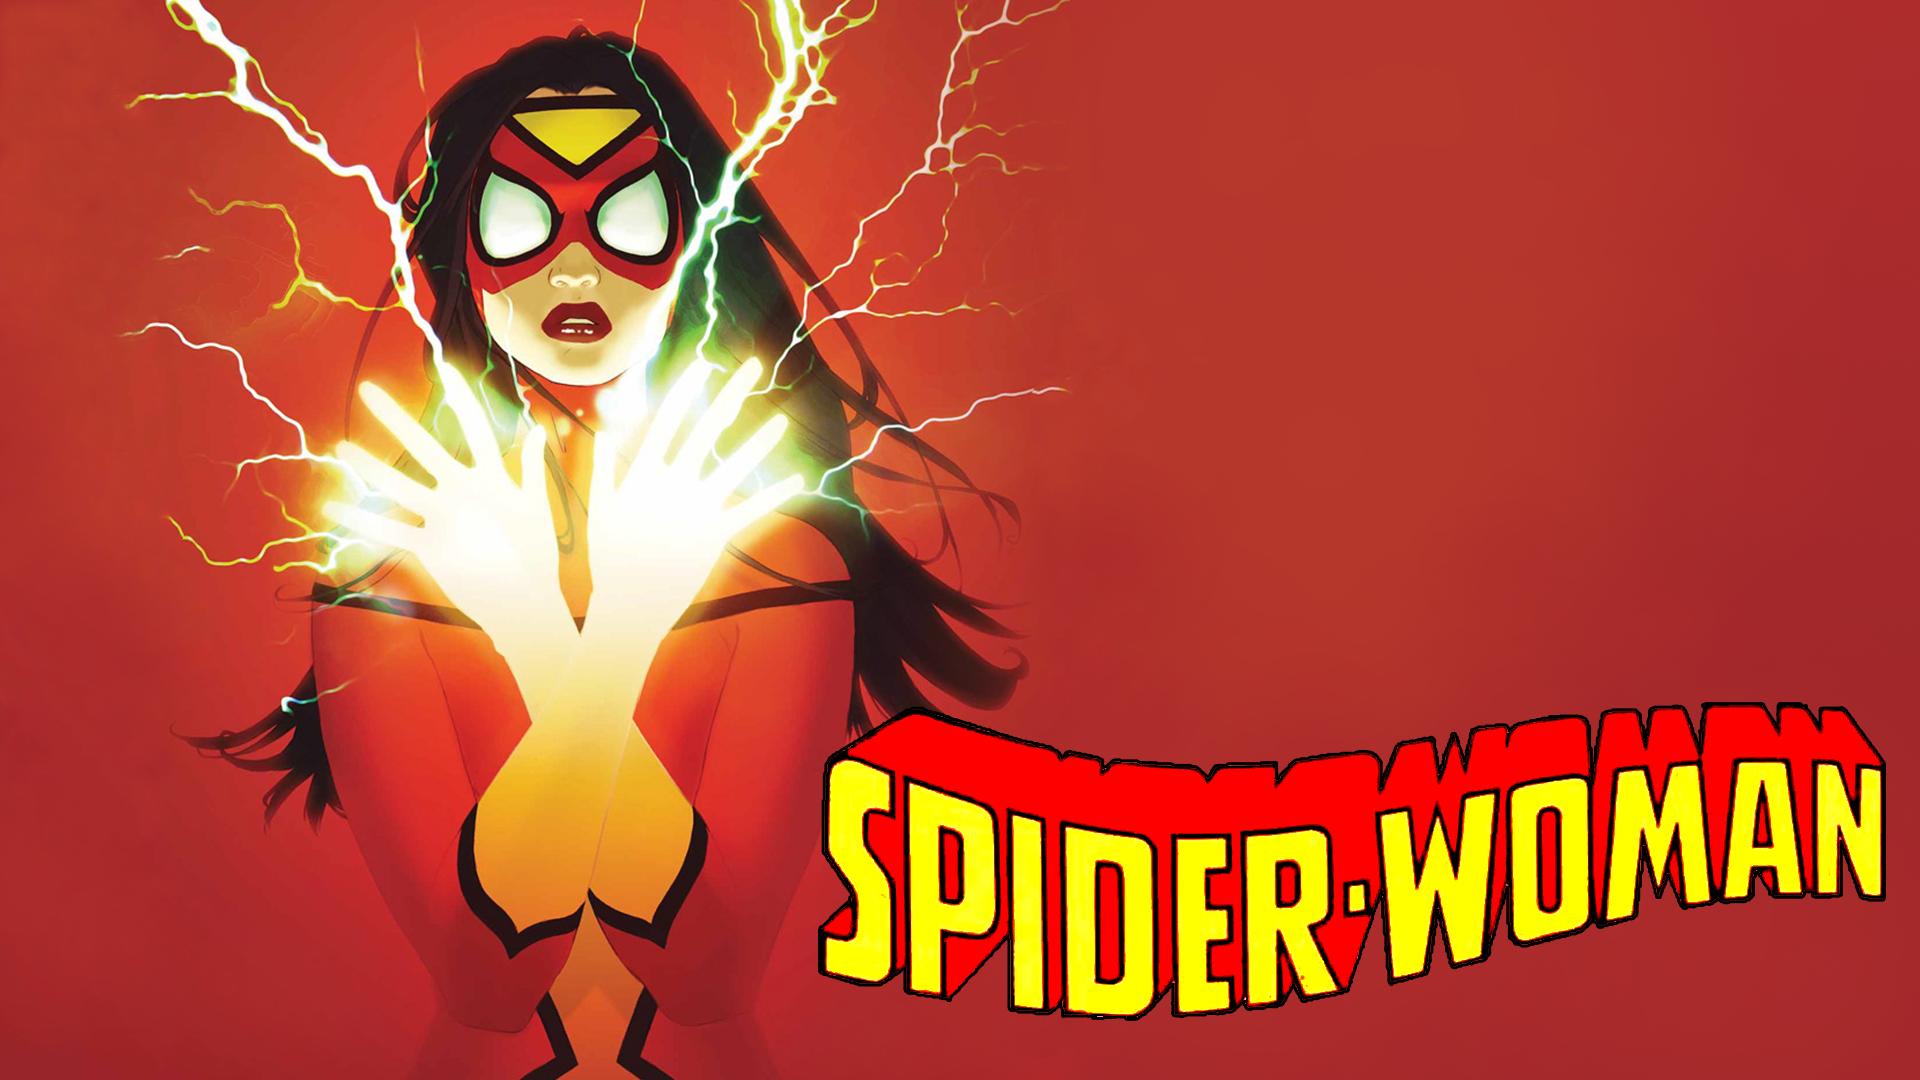 Spider Woman Wallpaper, Comics, HQ Spider Woman PictureK Wallpaper 2019